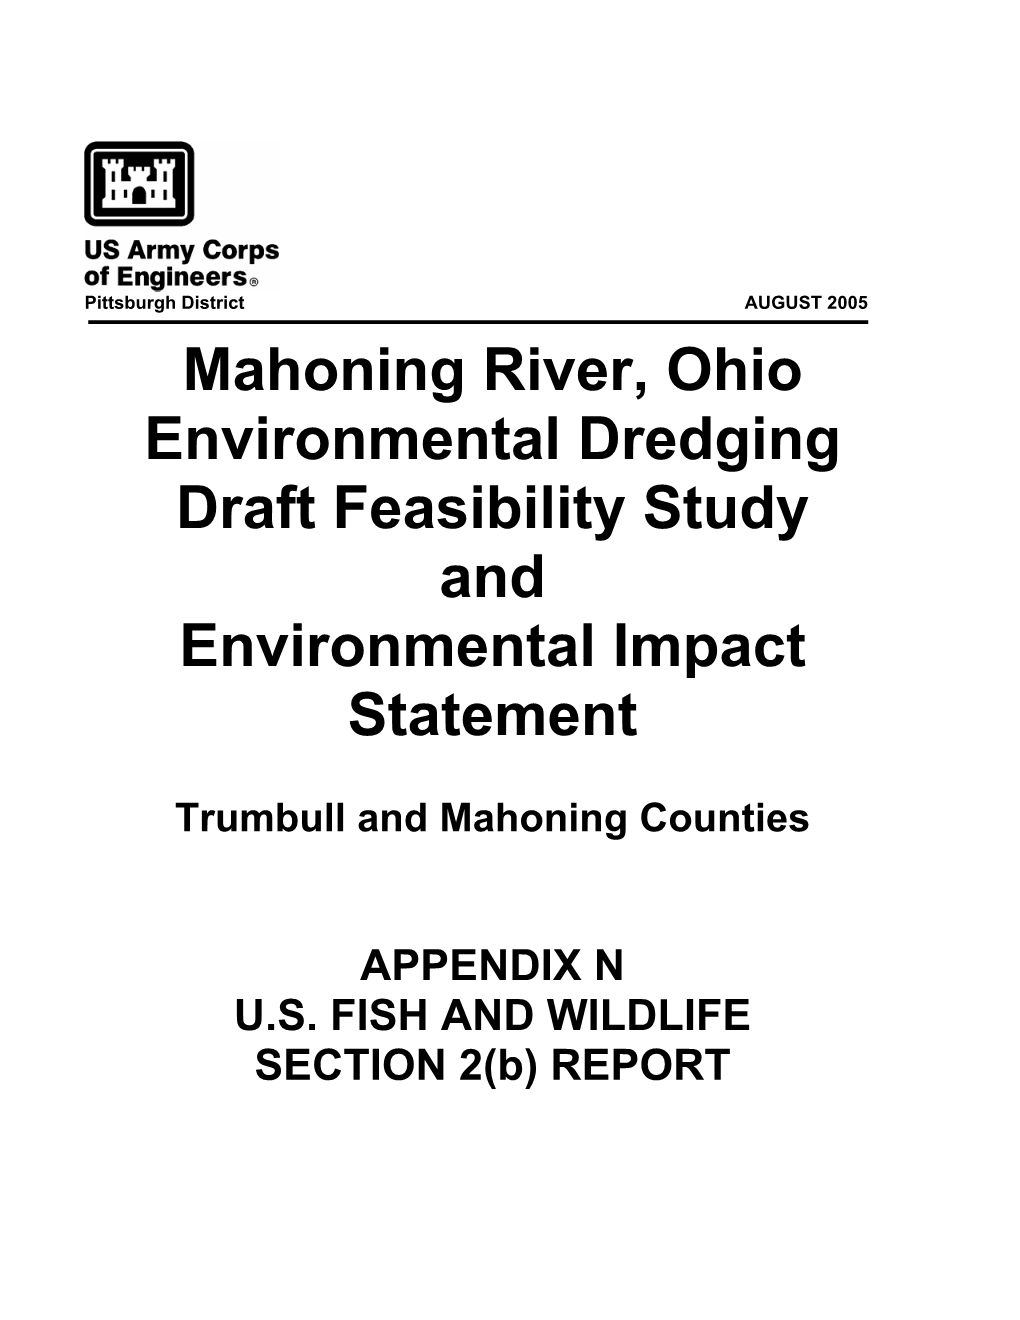 Mahoning River, Ohio Environmental Dredging Draft Feasibility Study and Environmental Impact Statement